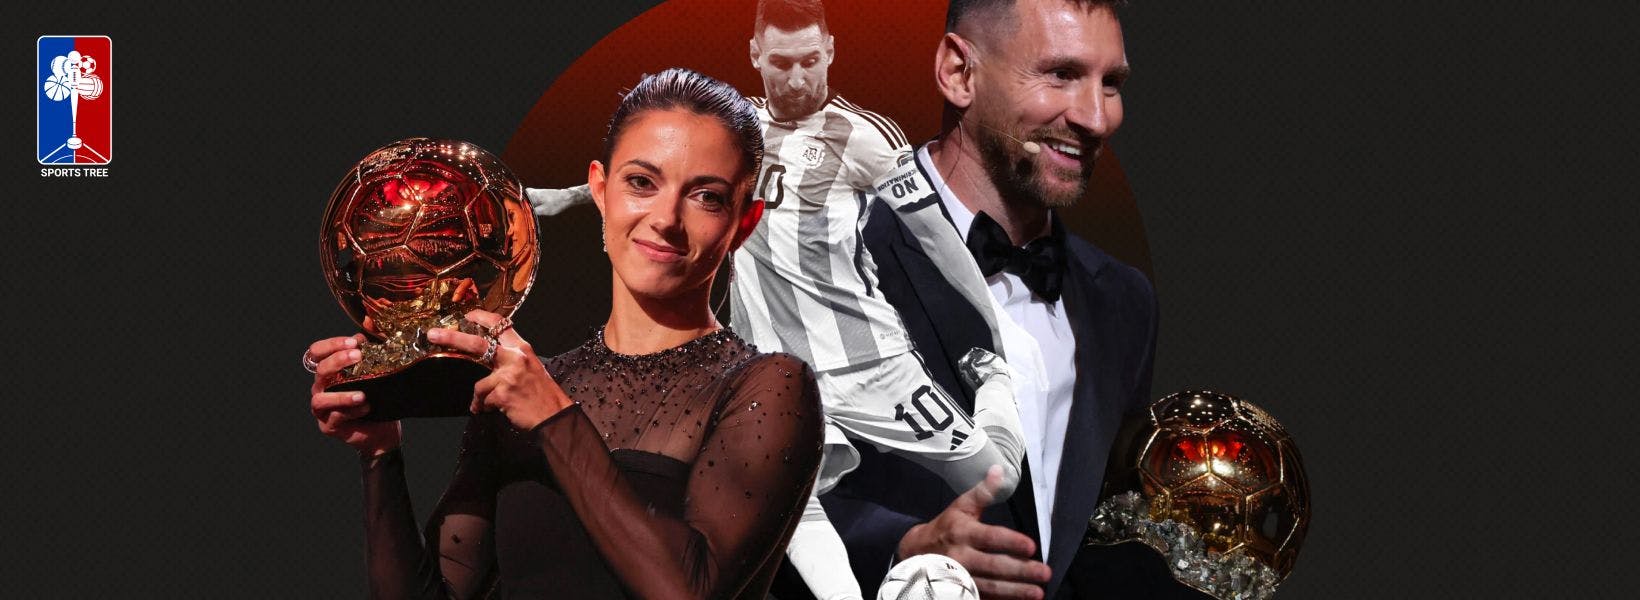 Ballon d’Or and Ballon d’Or Feminin recipients Lionel Messi and Aitana Bonmatí